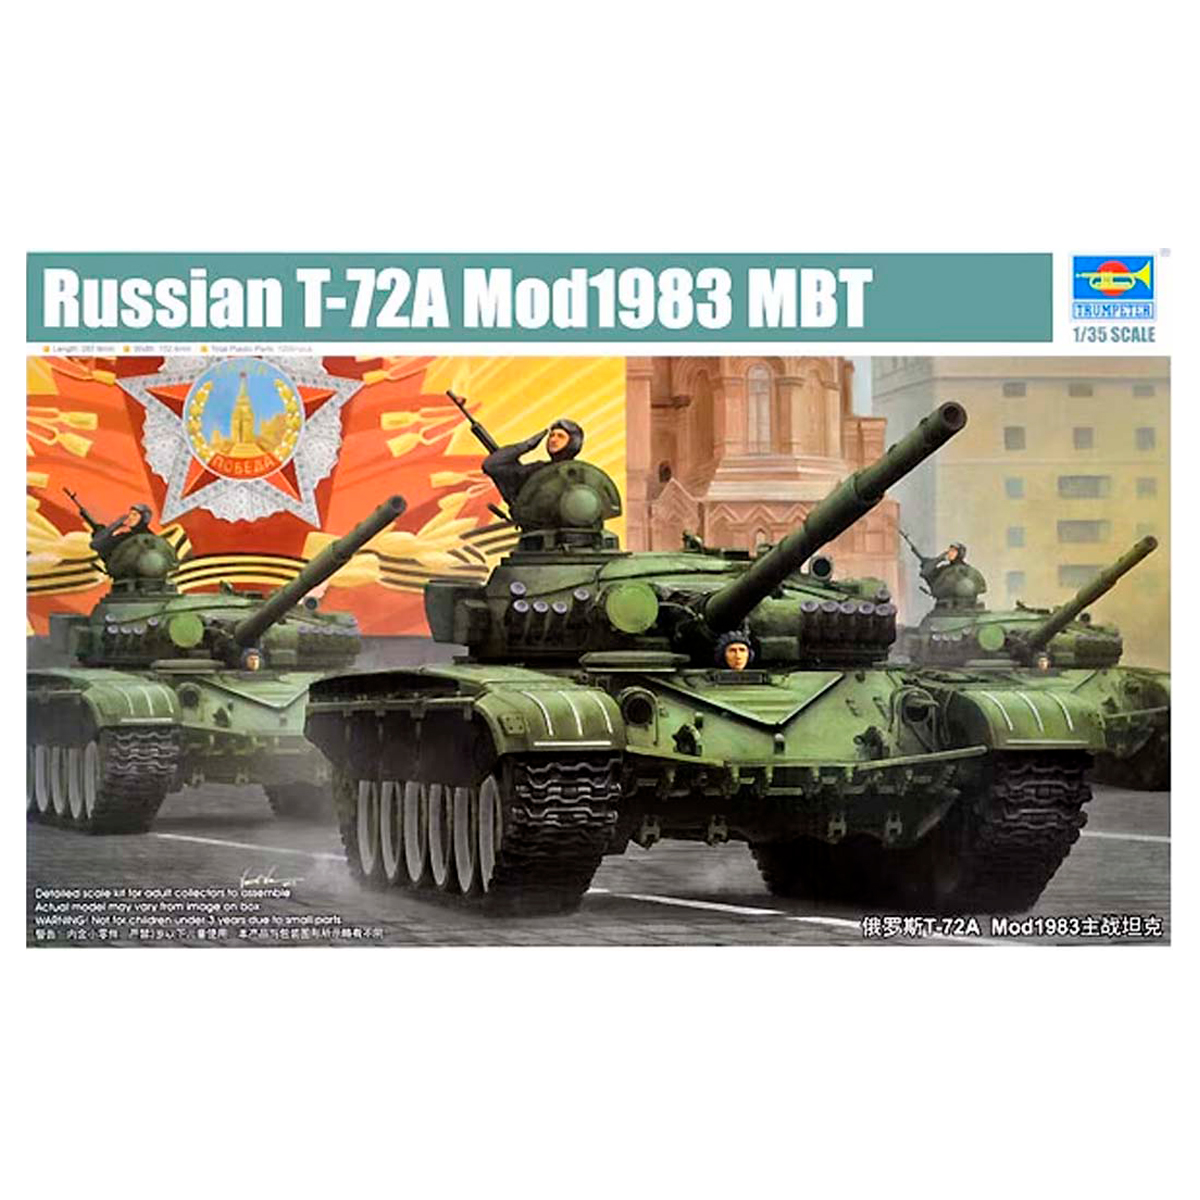 Russian T-72A Mod 1983 MBT 1/35